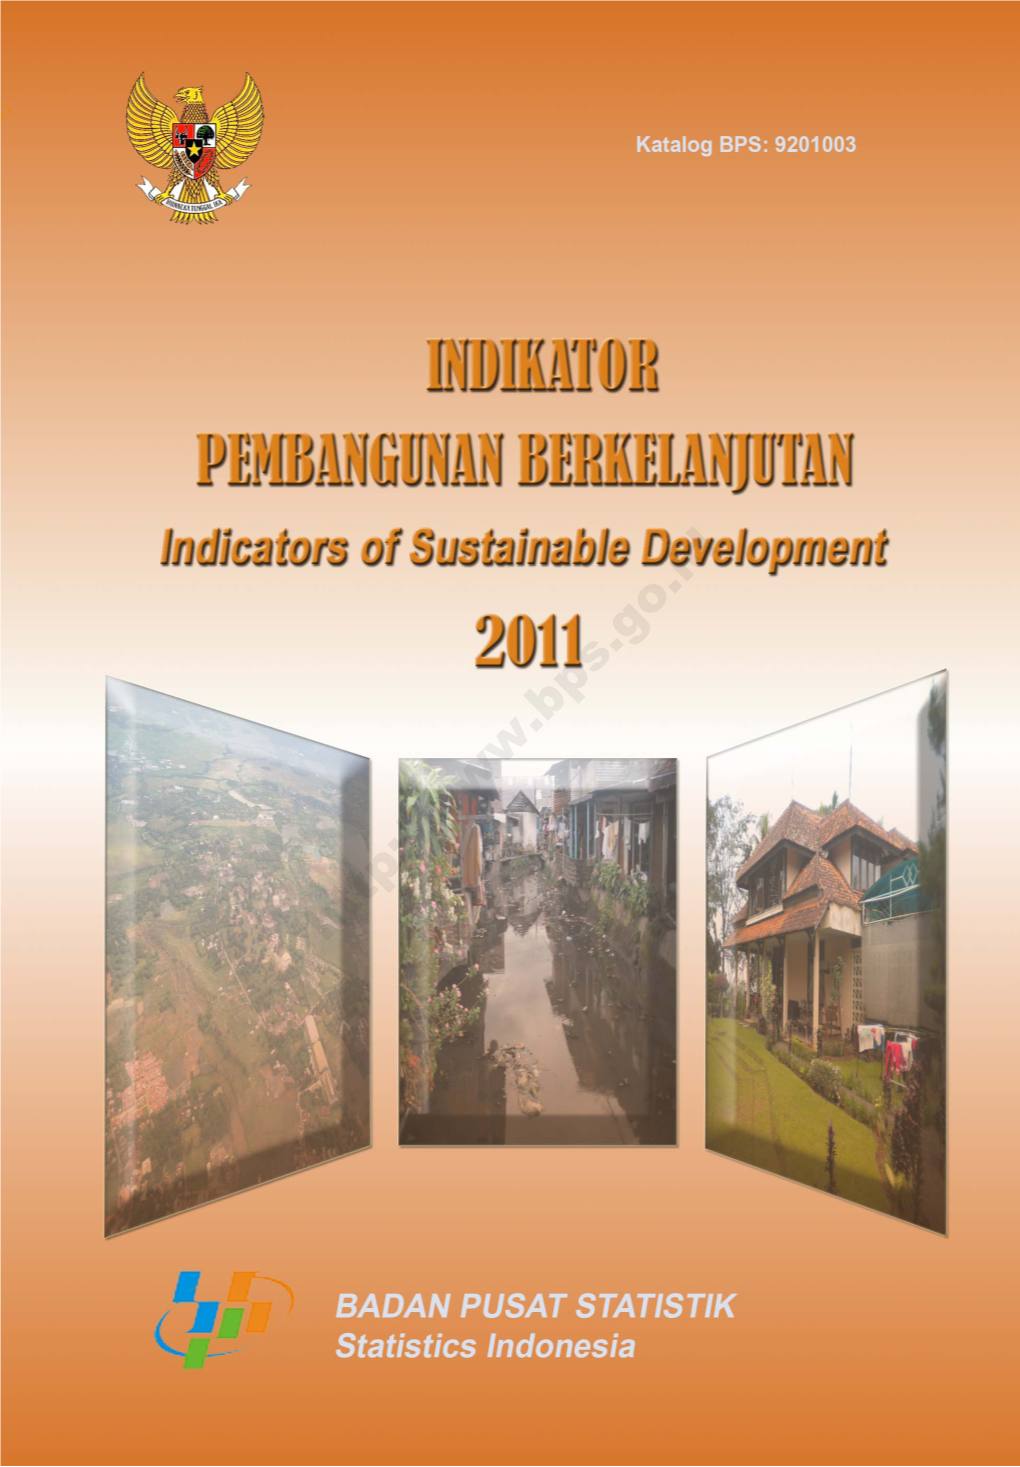 Sustainable Development Indicators, 2011